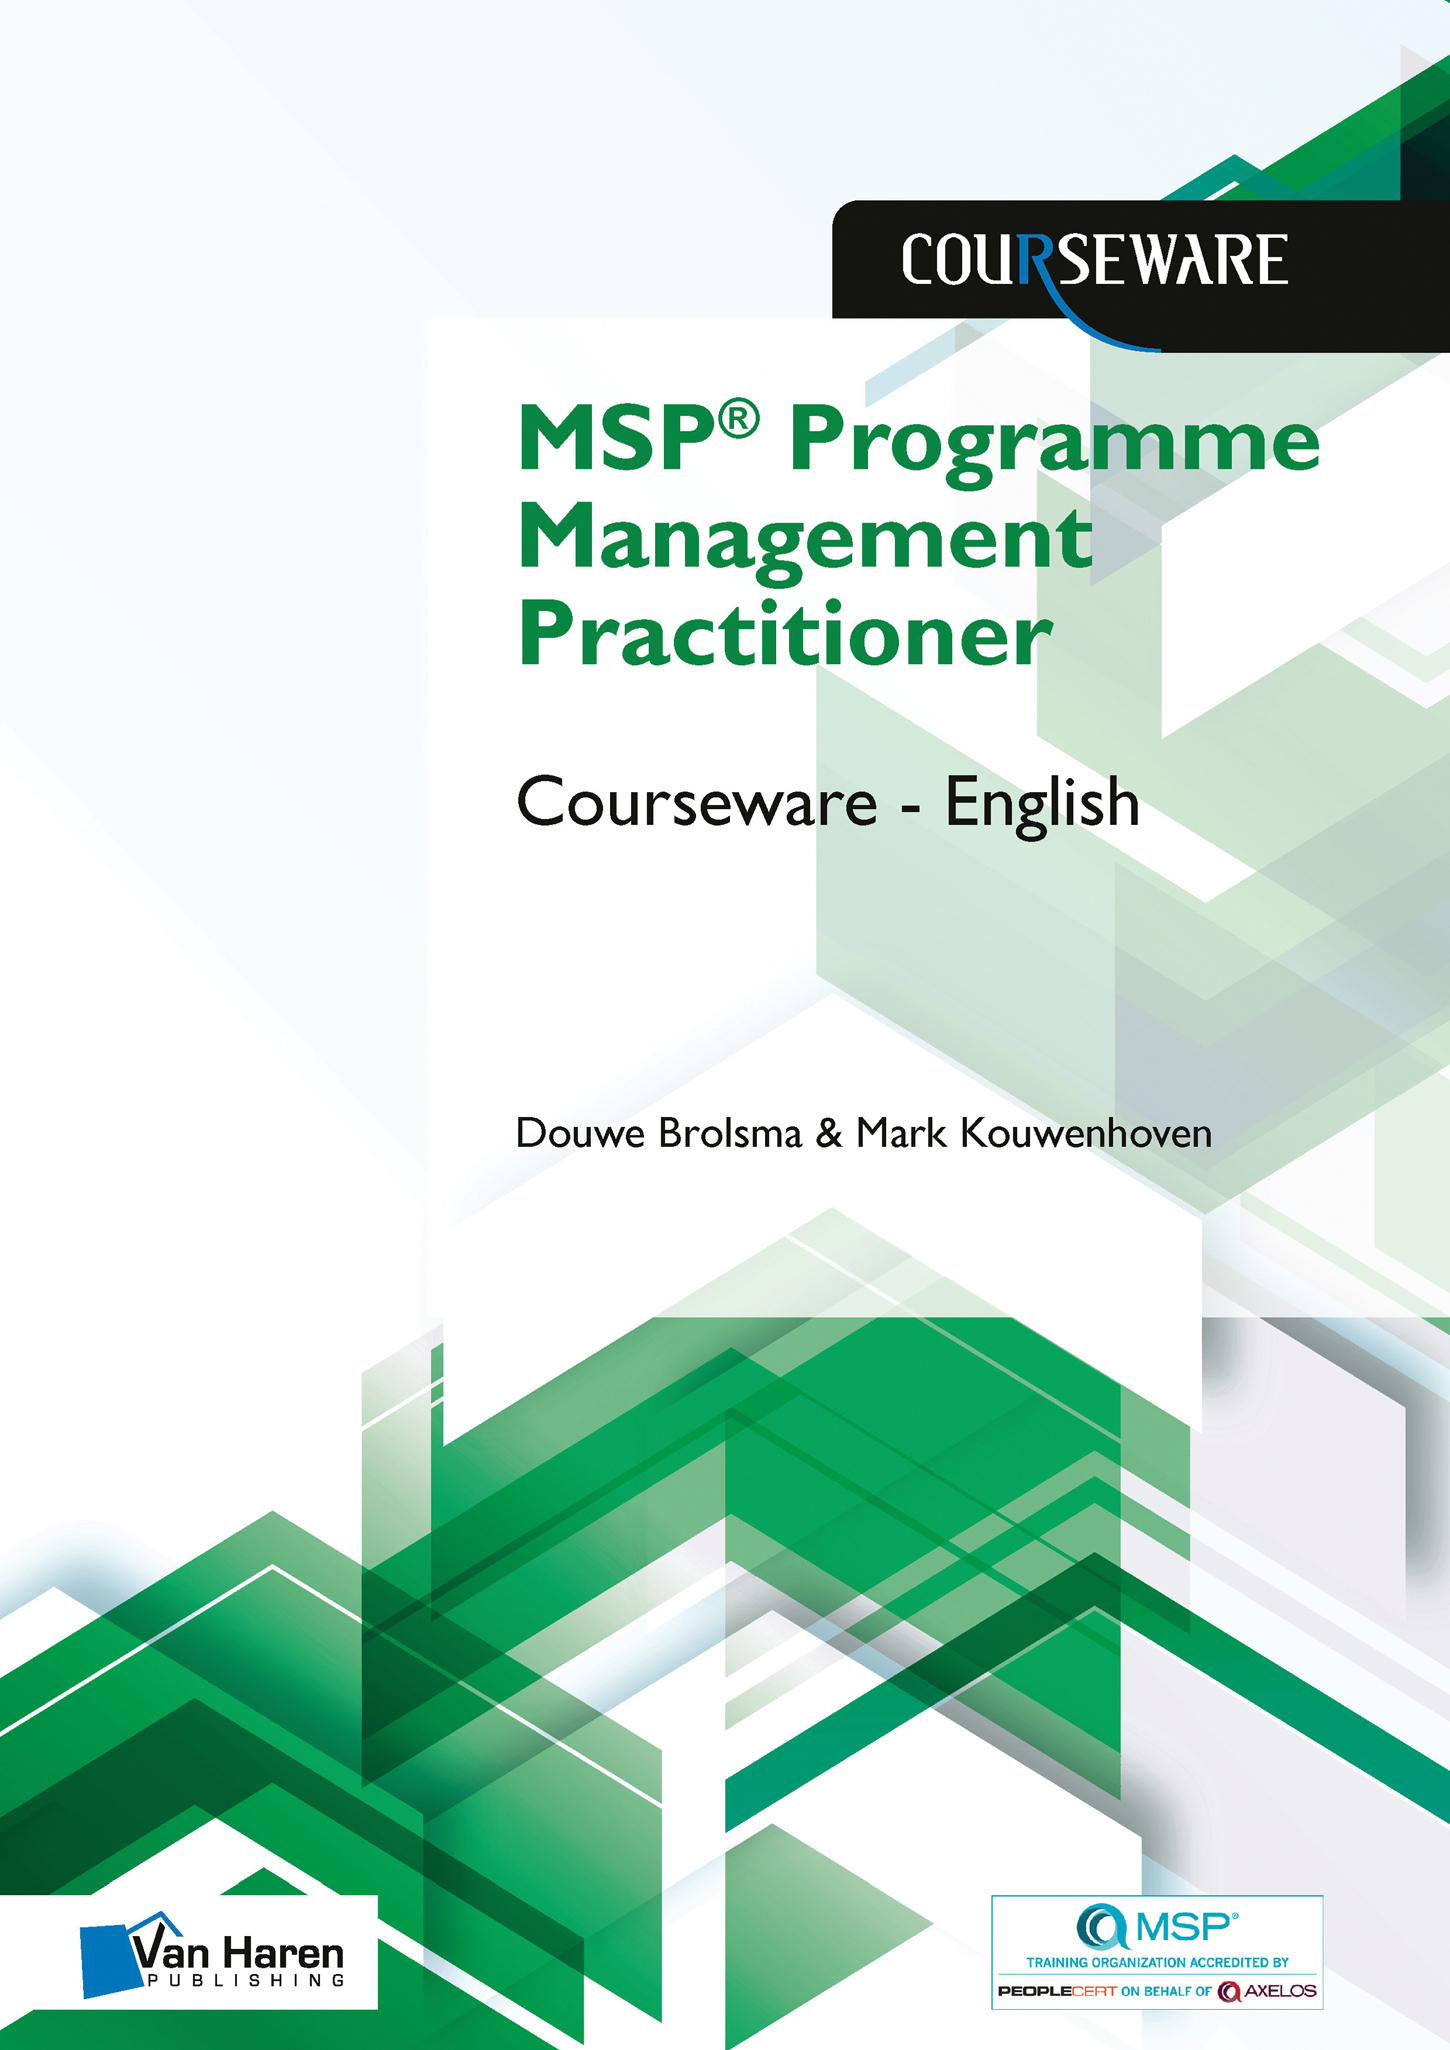 MSP® Programme Management Practitioner Courseware – English